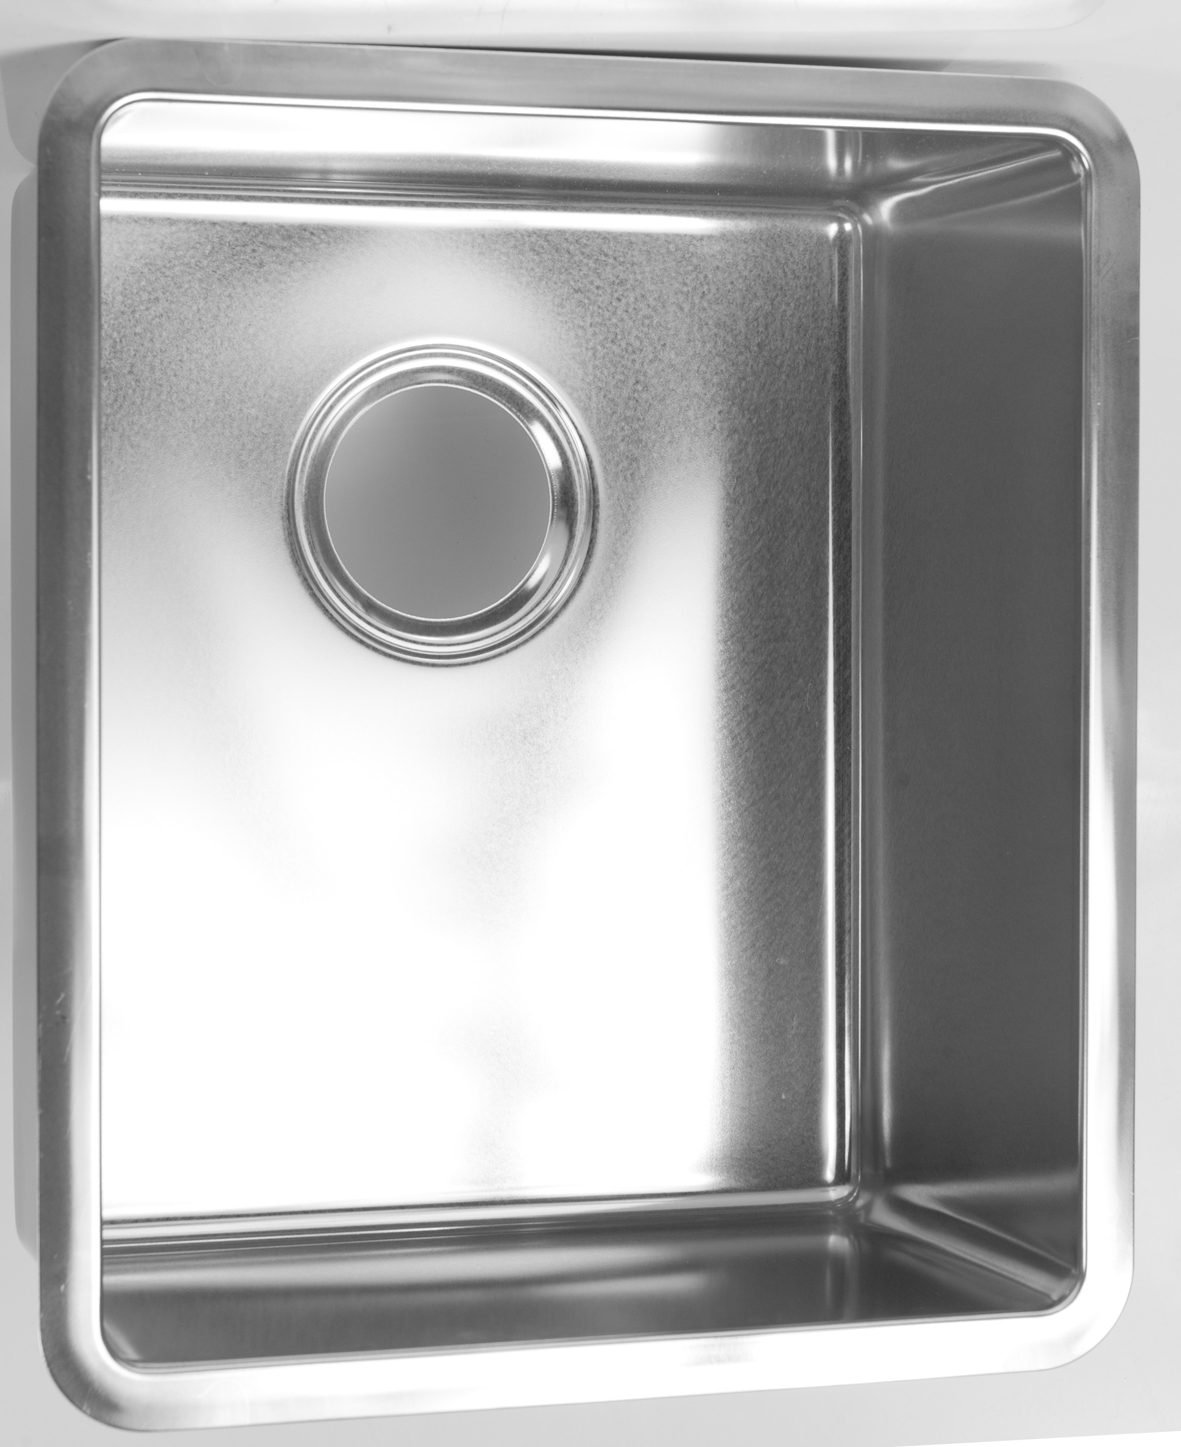 Tight corner radius  sink 304 stainless steel 340 x 400 x 200